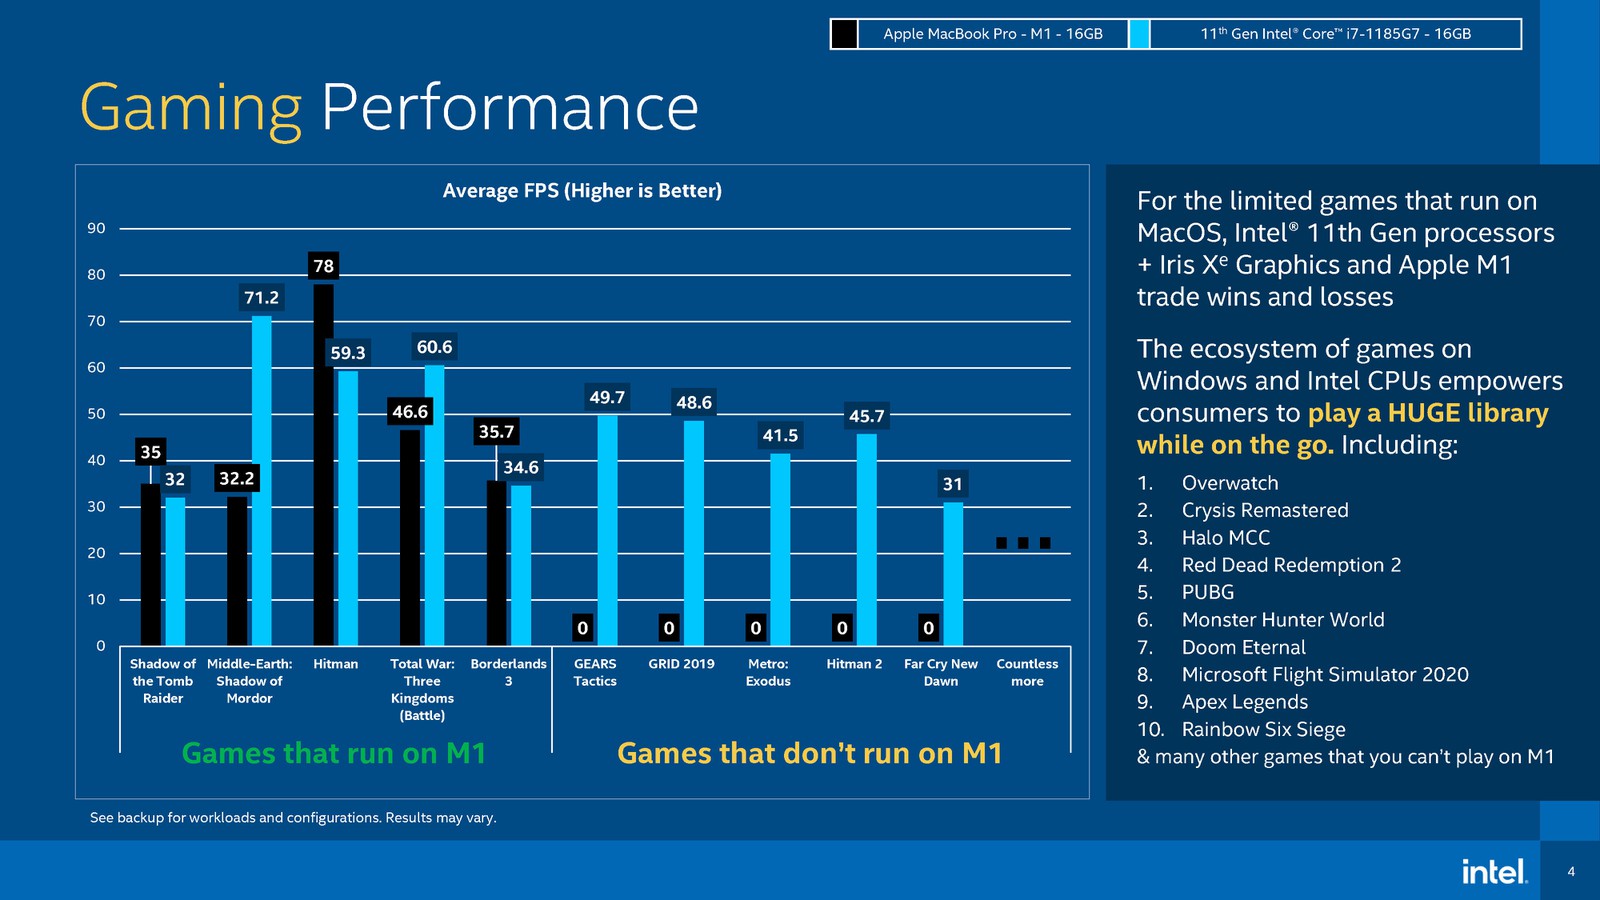 Intel VS. Apple M1 - Gaming